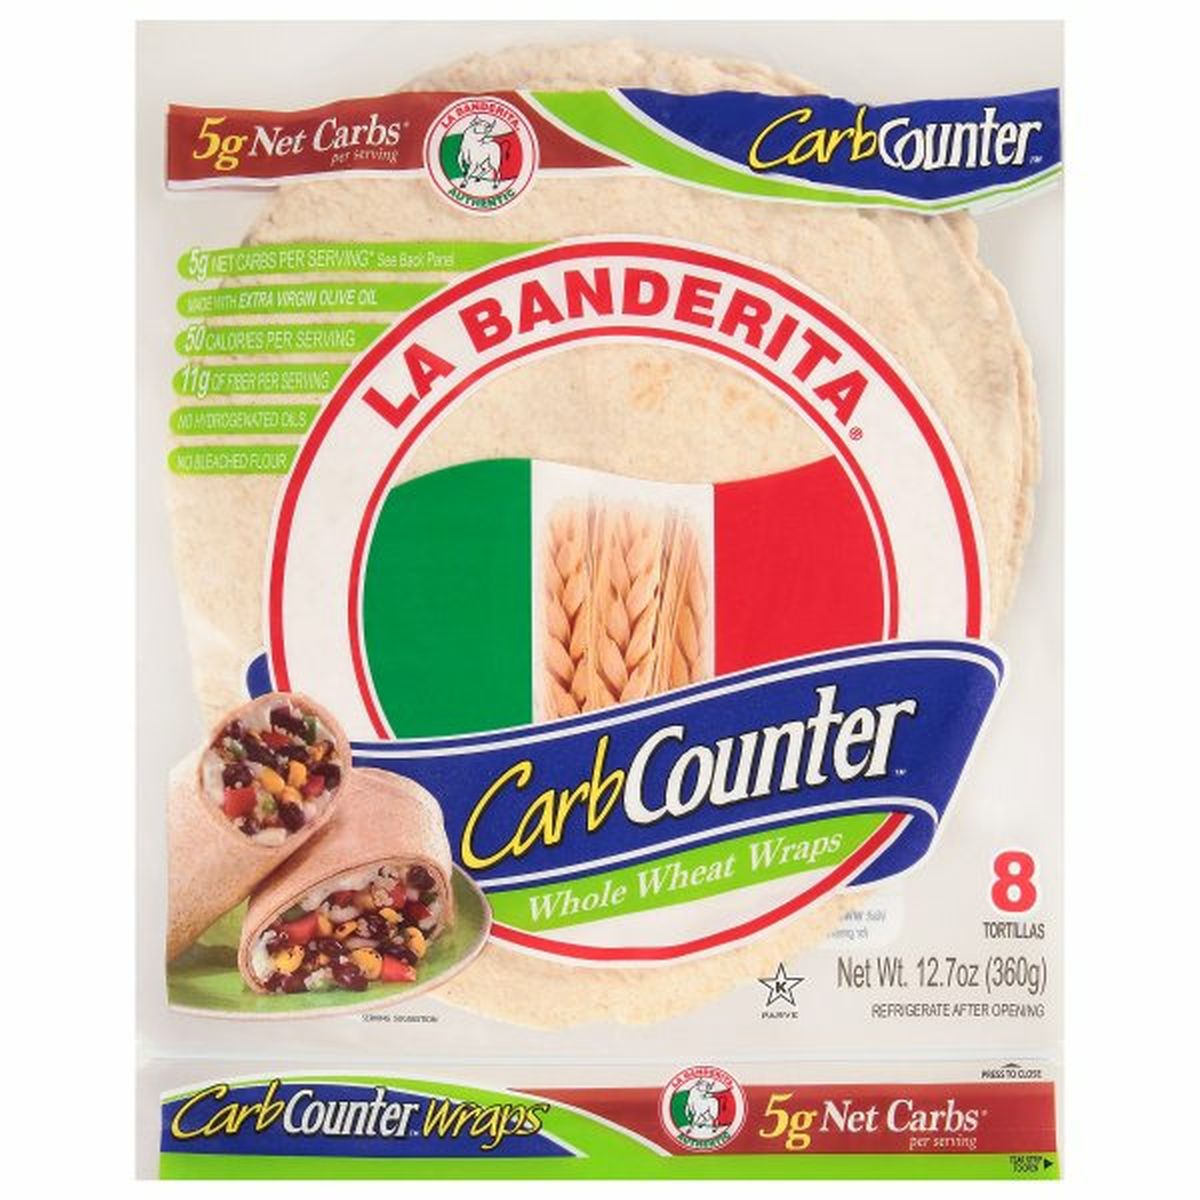 Calories in La Banderita CarbCounter Tortillas Wraps, Whole Wheat